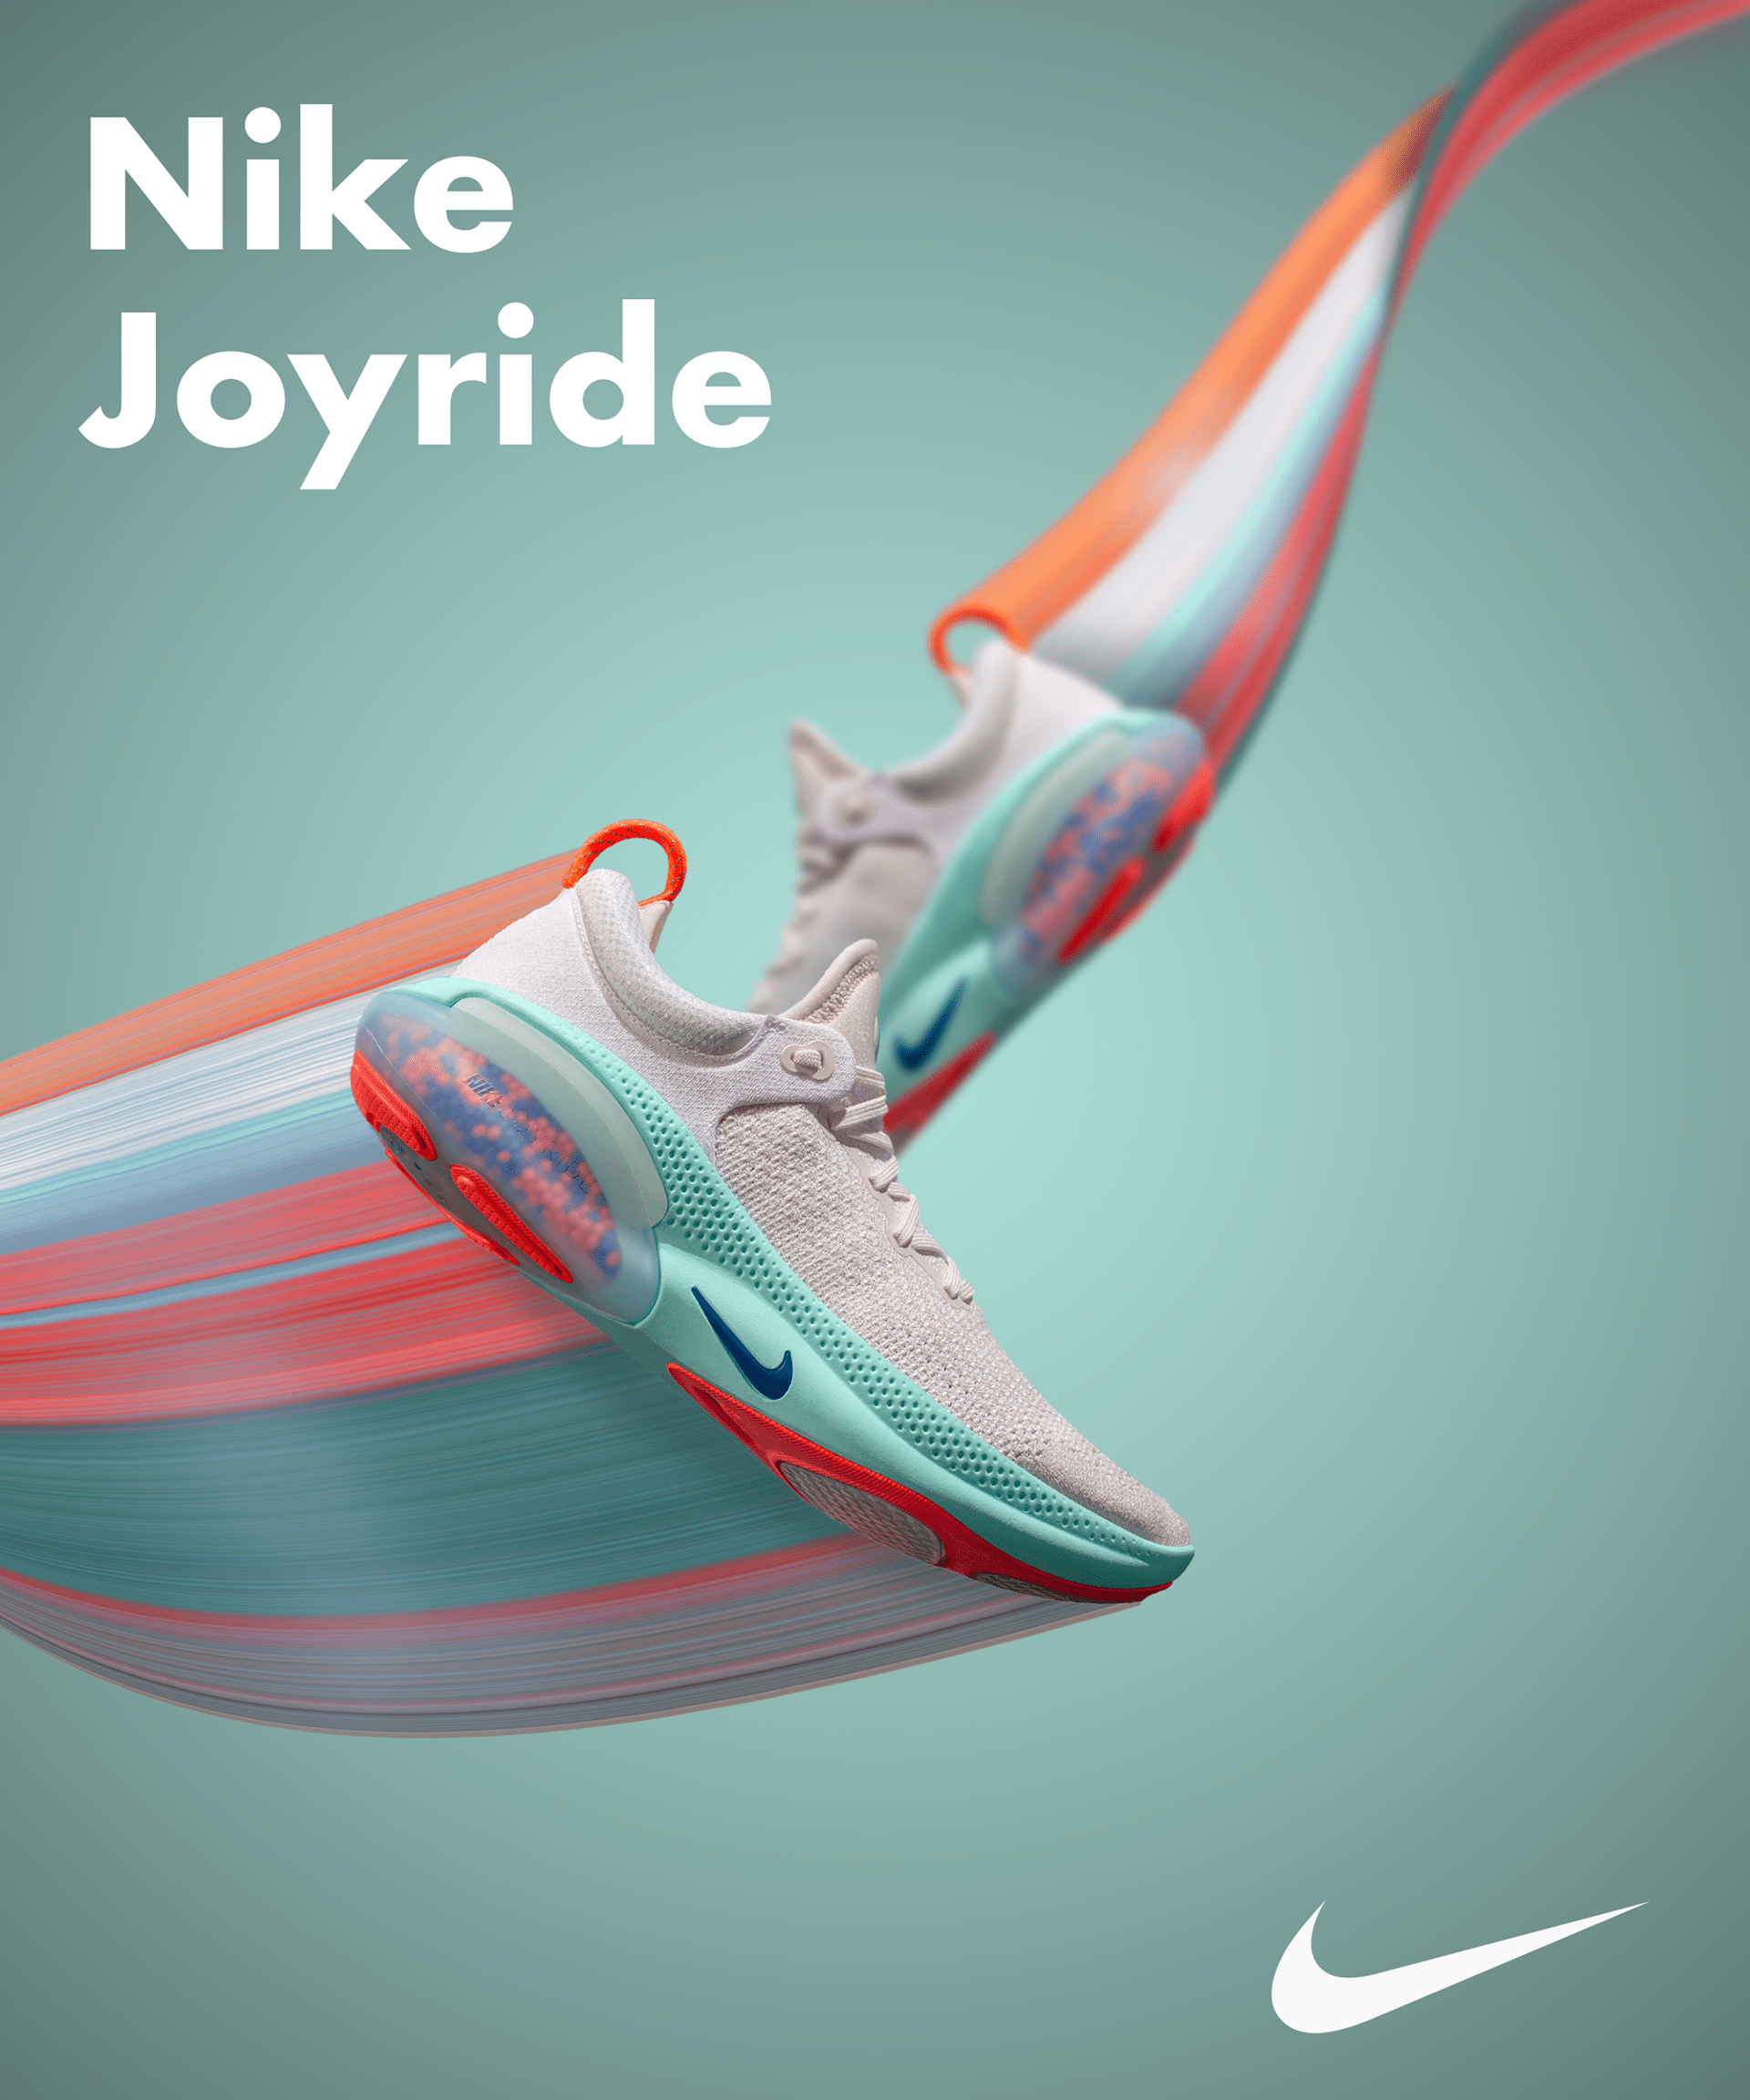 Nike Joyride poster on Behance